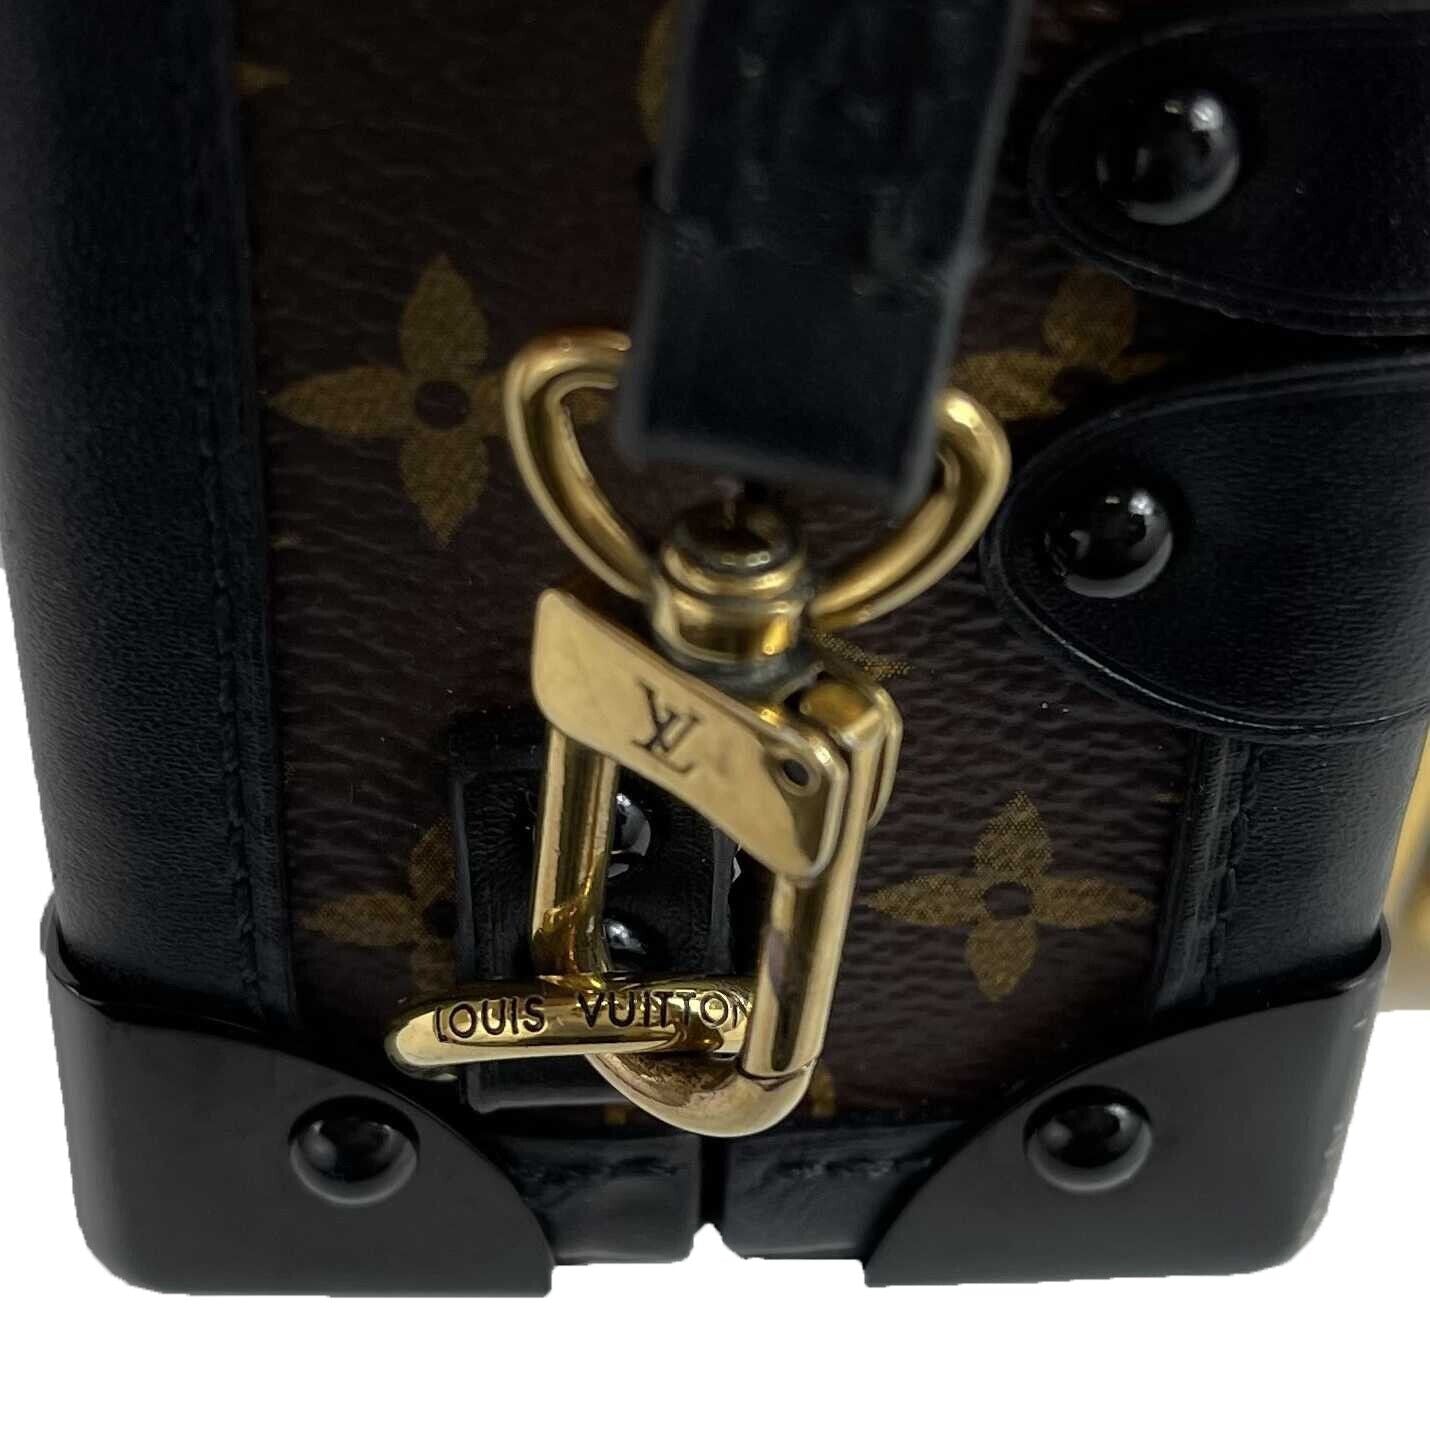 Petite malle leather handbag Louis Vuitton Black in Leather - 19936319